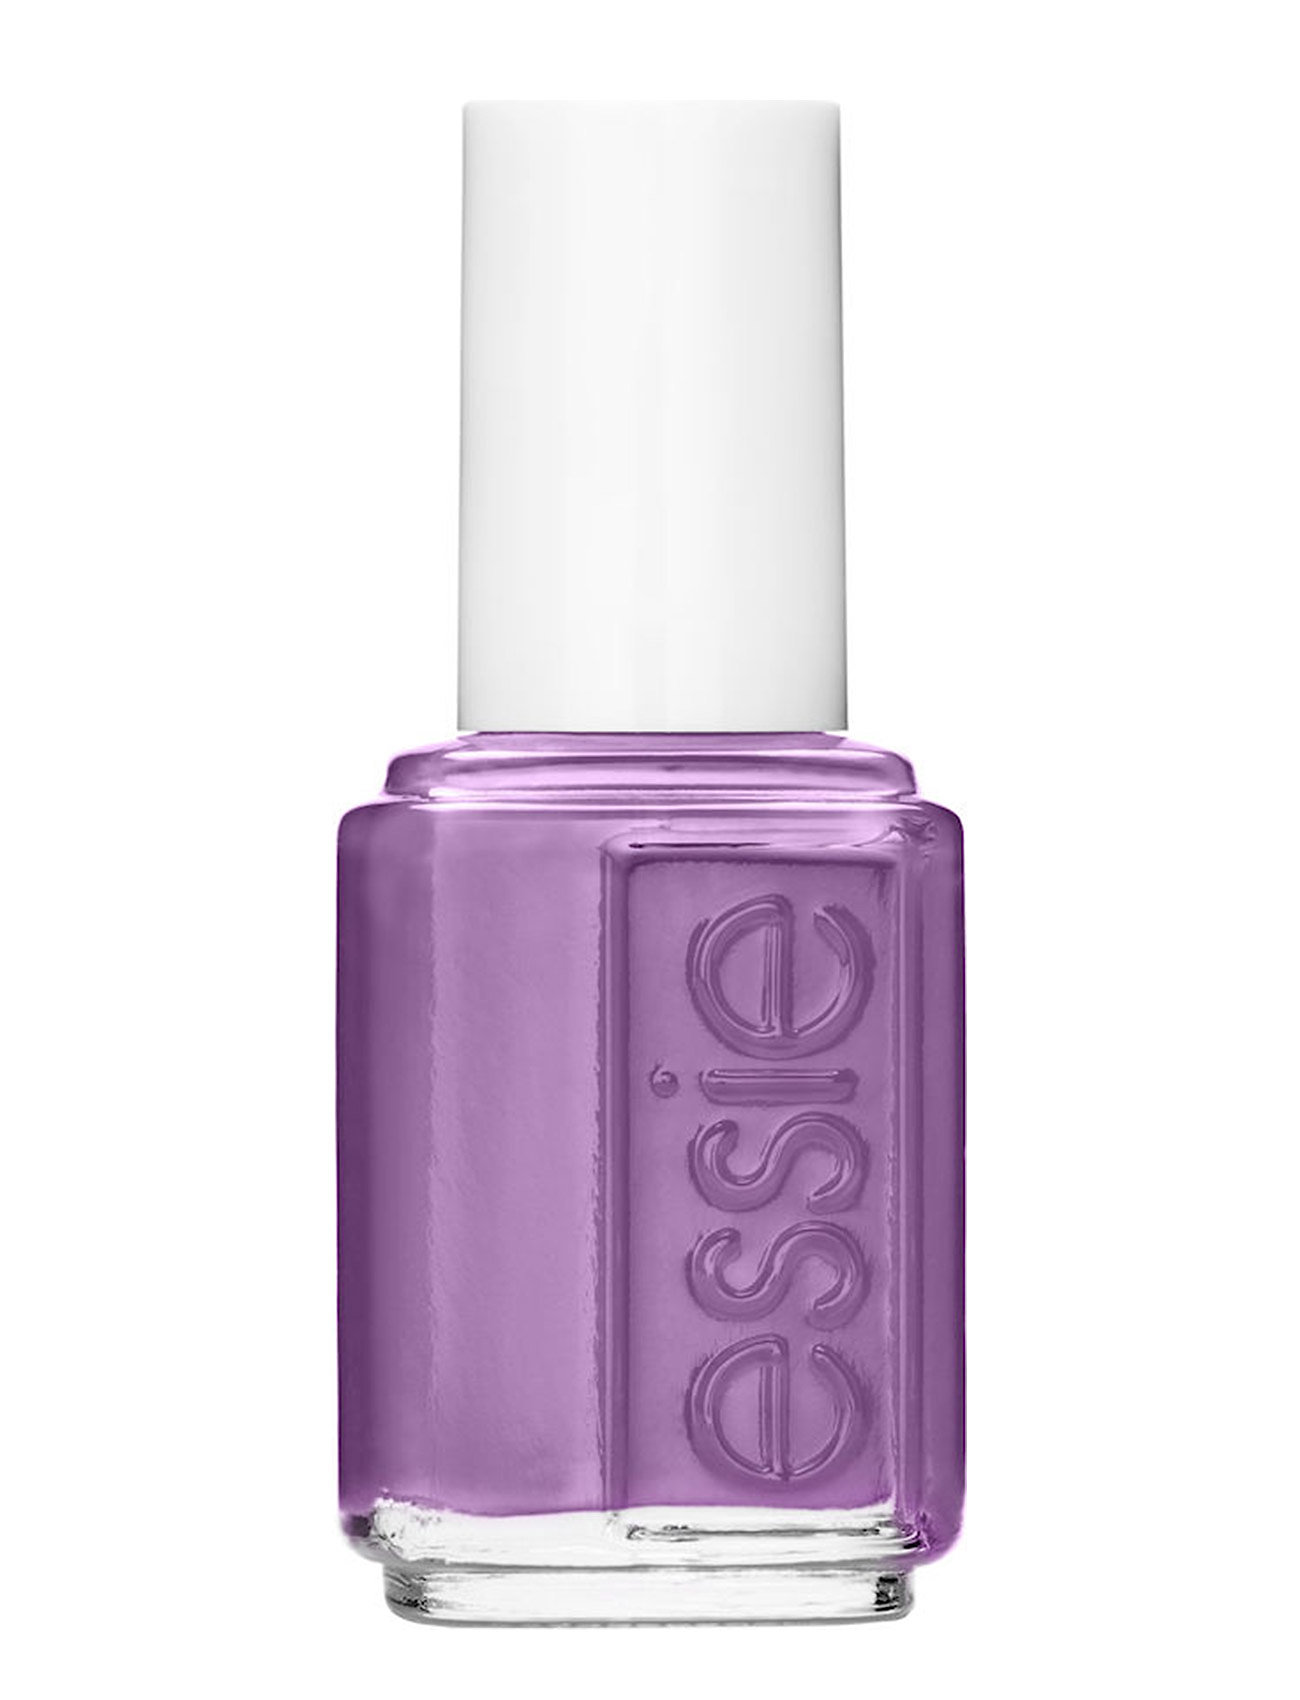 Essie Classic Play Date 102 Neglelak Makeup Purple Essie